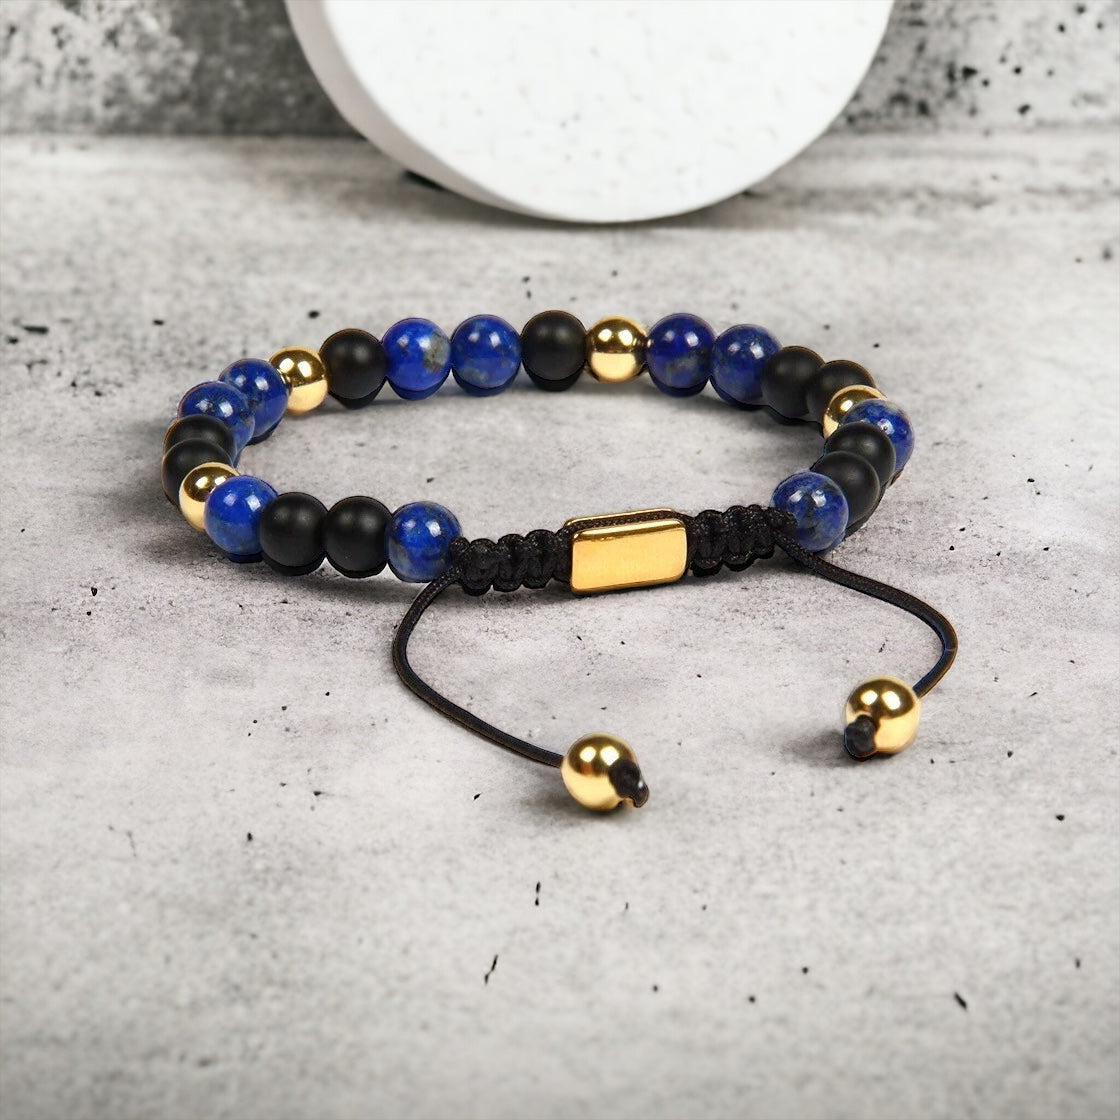 Black Onyx, Lapis Lazuli & Gold Beads Macrame Bracelet - My Harmony Tree